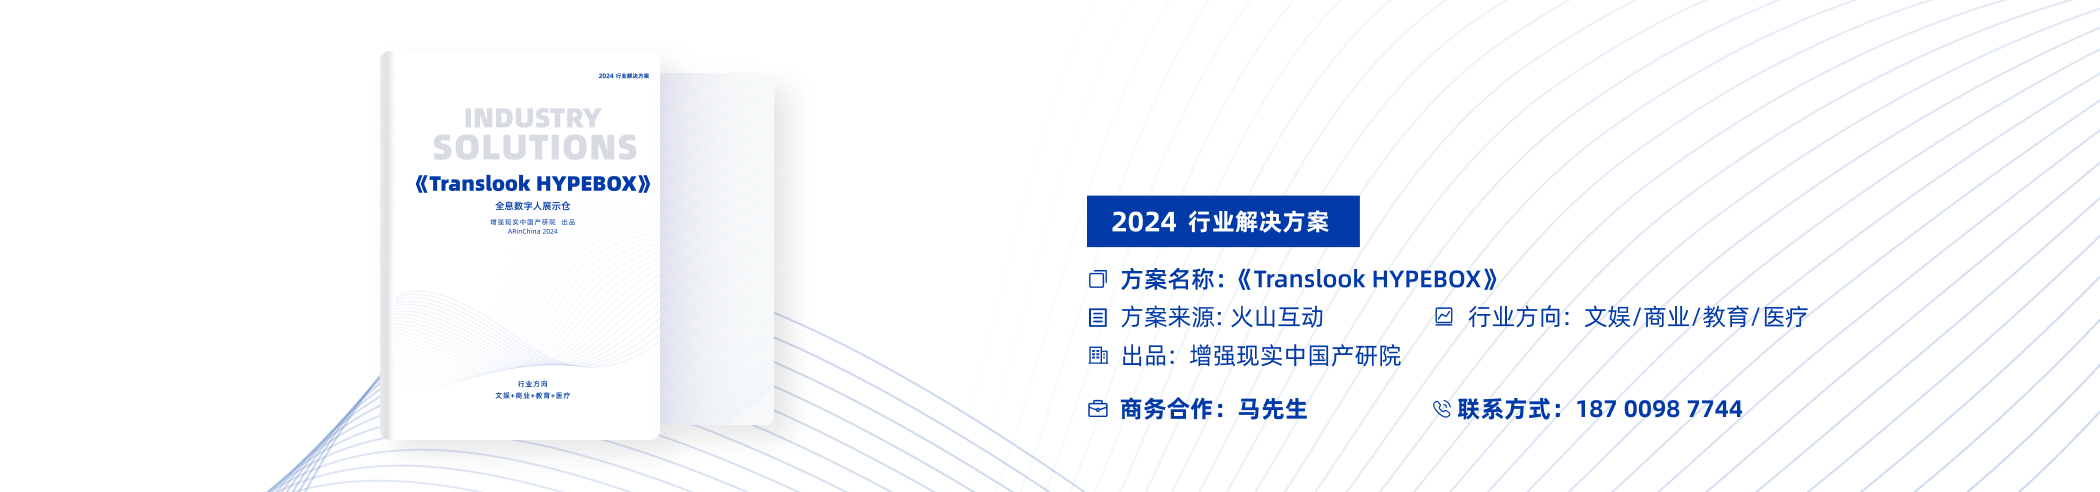 ARinChina 2023元宇宙年度荣誉榜——创新硬件榜单